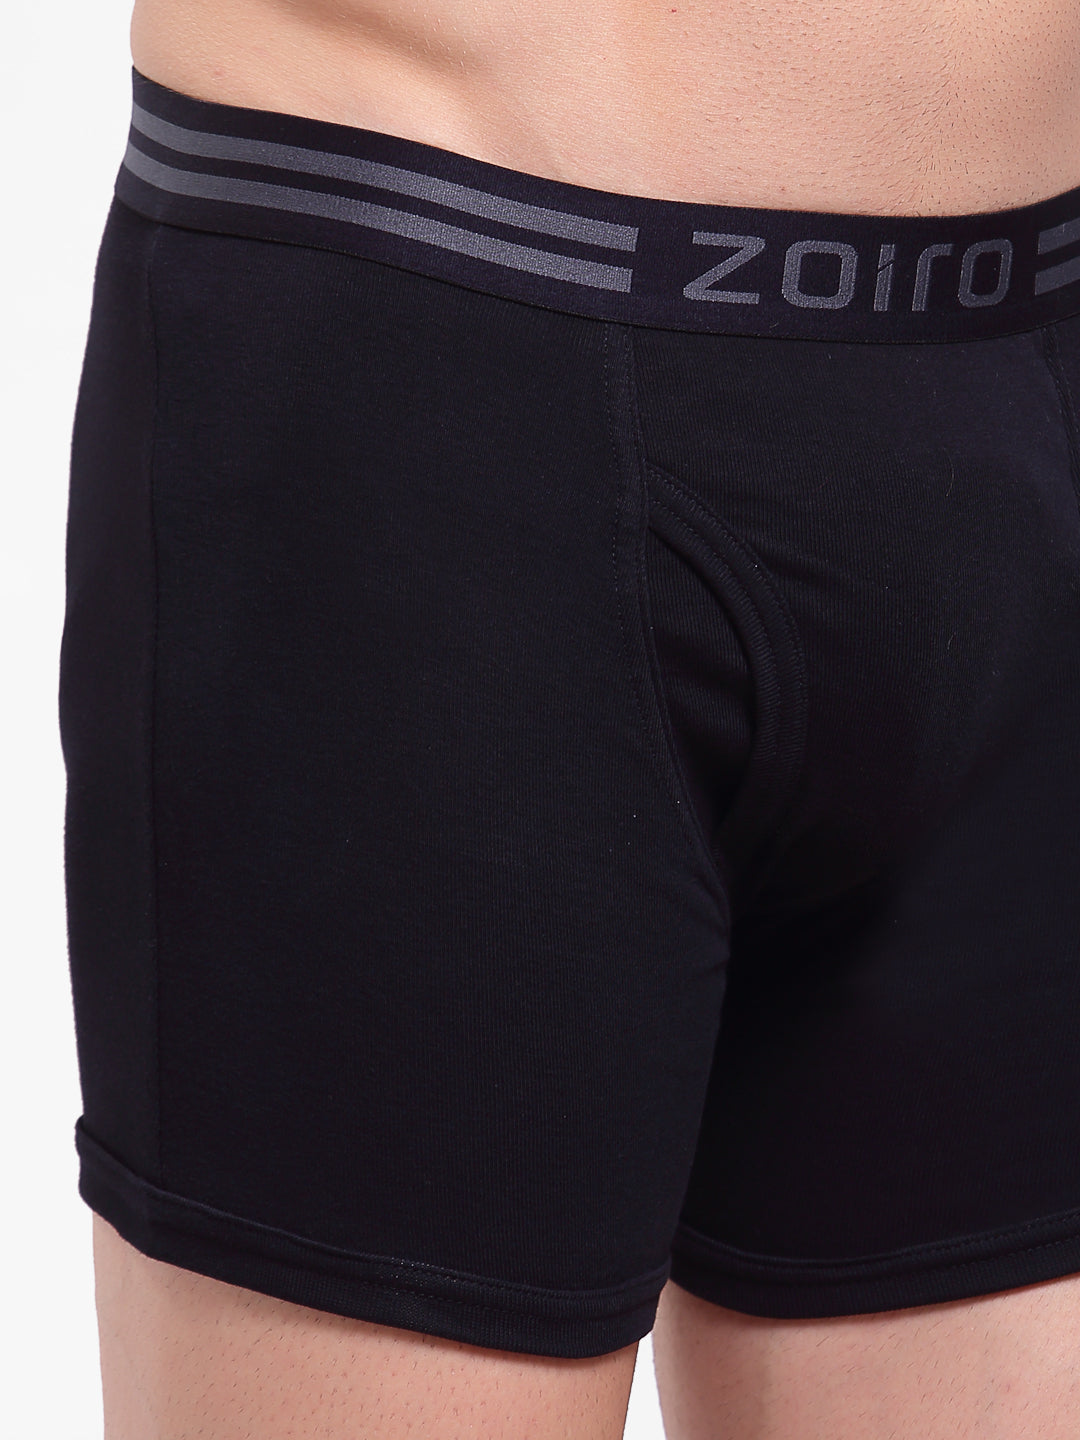 Zoiro Men&#39;s Cotton Soft Classics Trunk Black